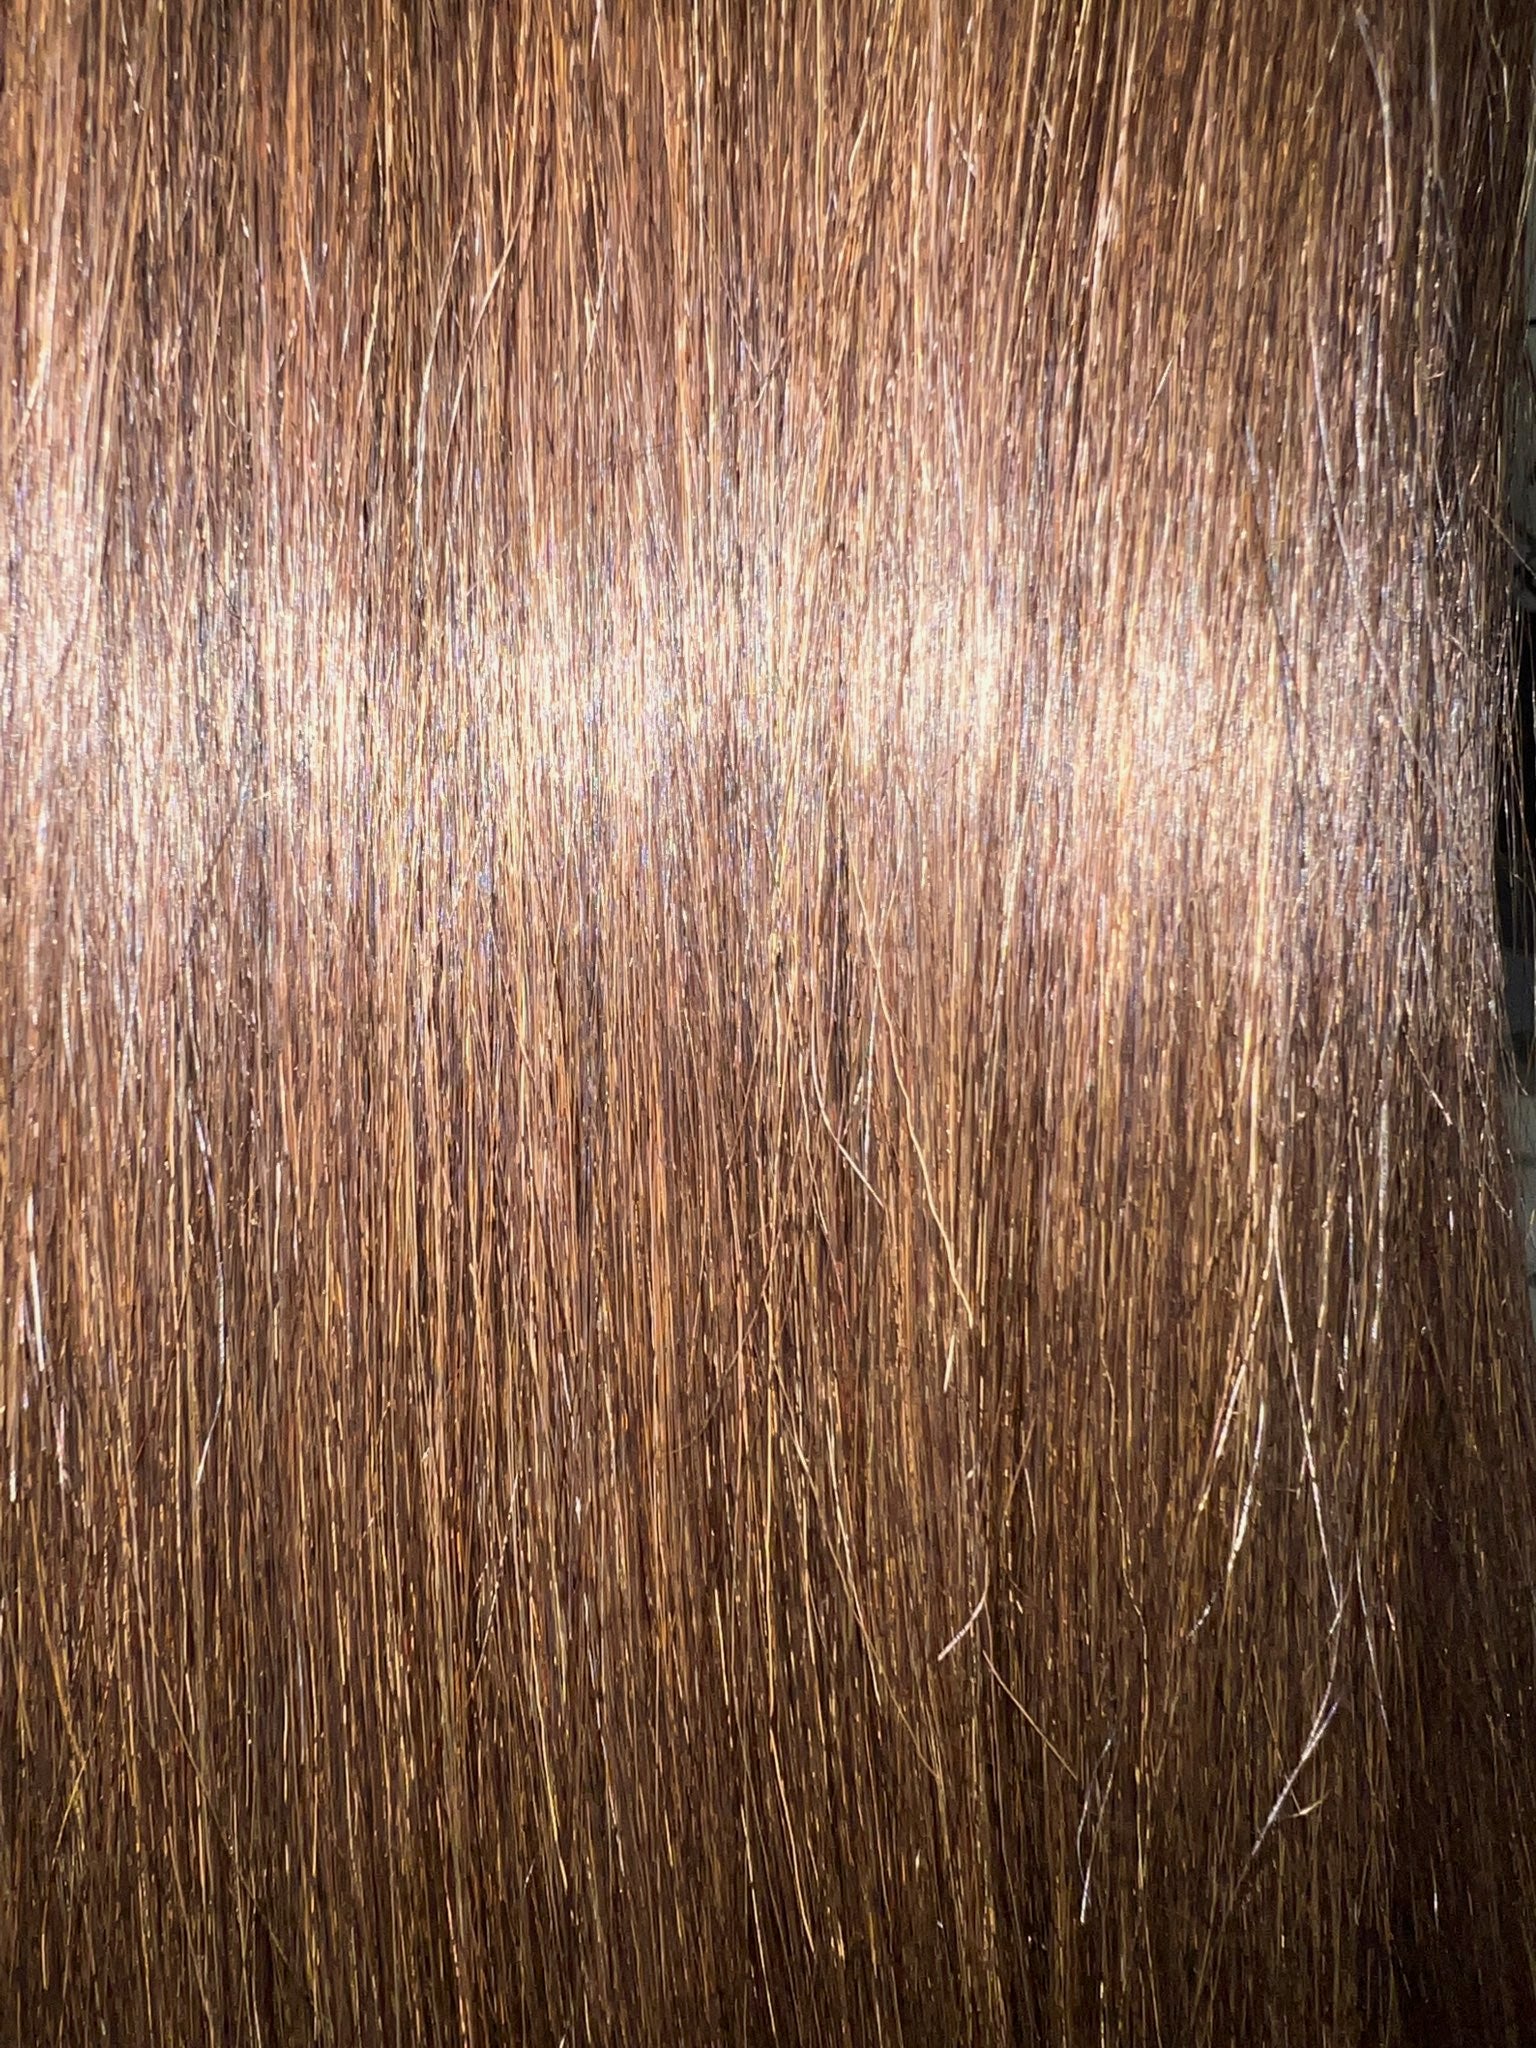 WannaBe 100% Remi Human Hair Full Cap Wig- Venus - Beauty Bar & Supply